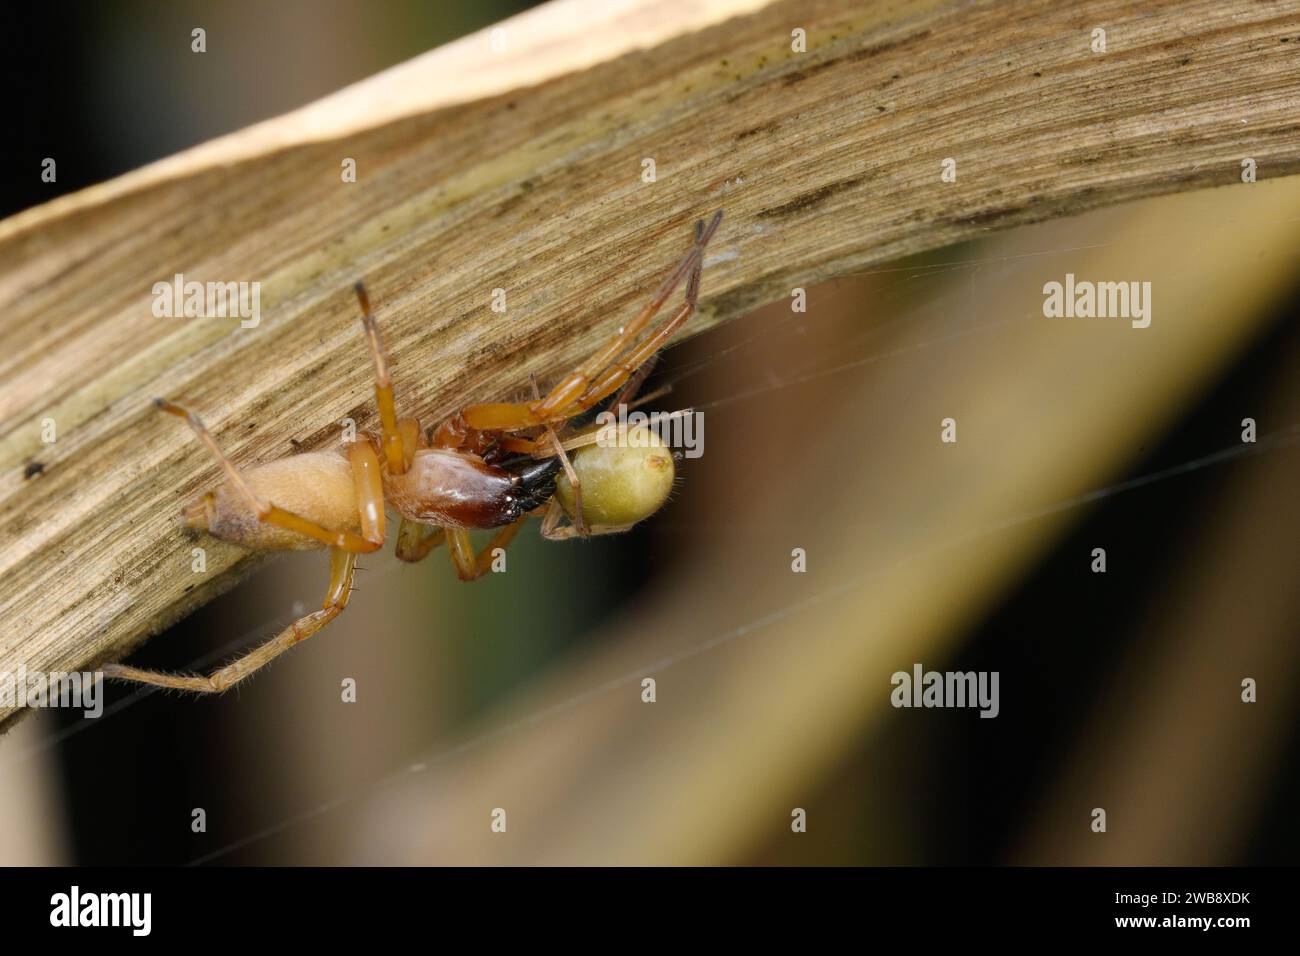 The predatory Cheiracanthium punctorium, a Yellow Sack Spider, traversing a dry leaf in search of prey, illustrating Satara's diverse arachnid species Stock Photo